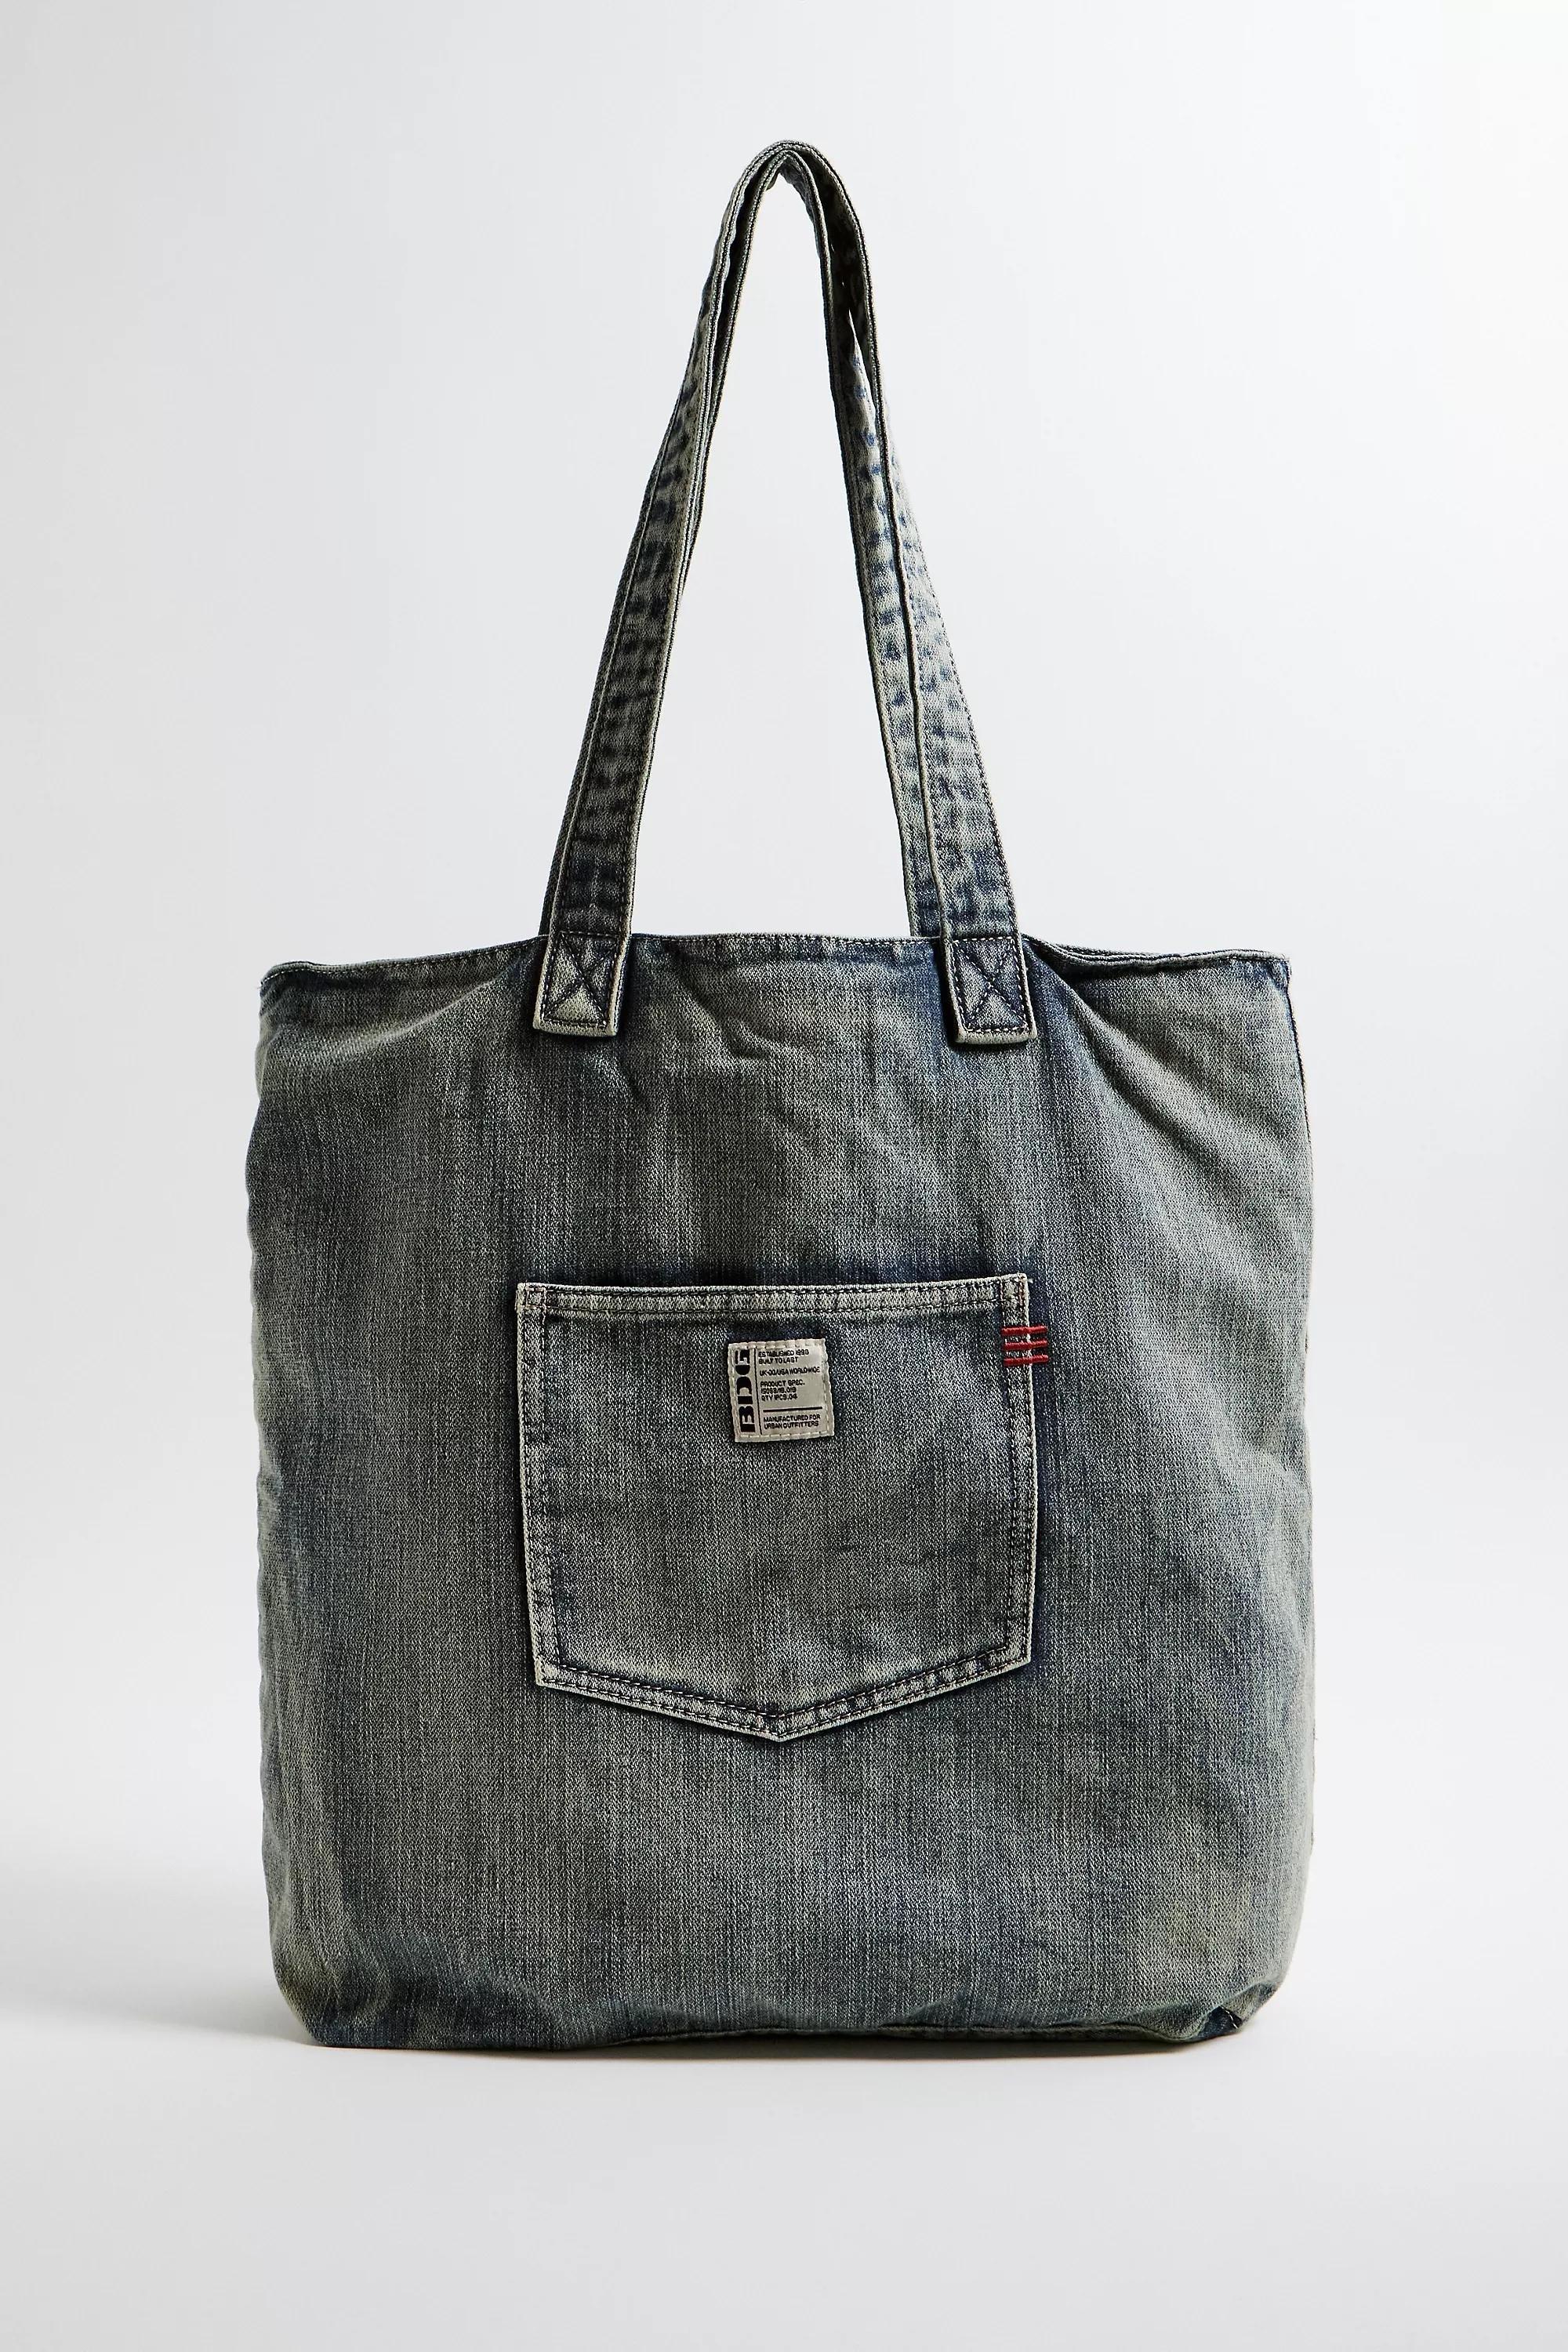 Urban Outfitters - Grey Bdg Denim Bag